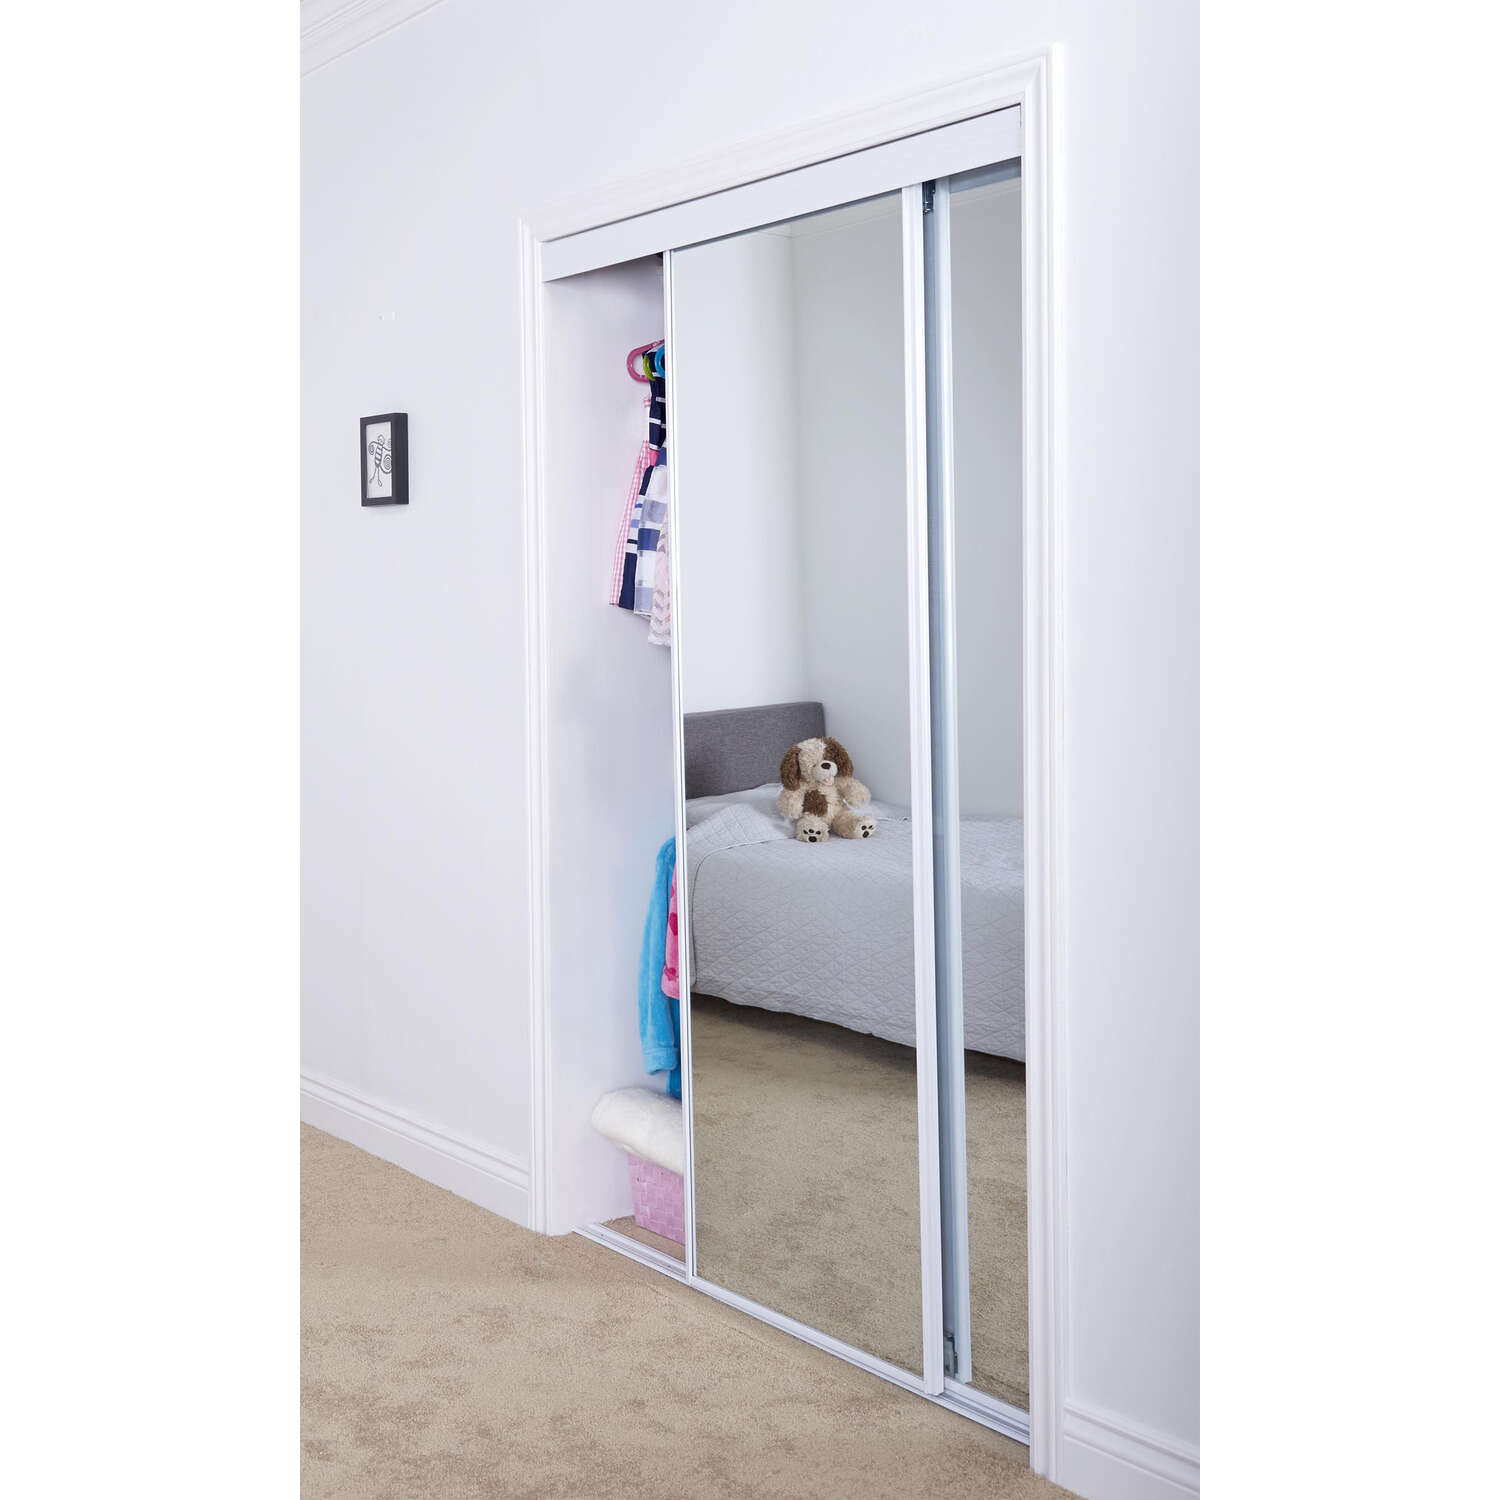 Erias Mirrored Sliding Door Ace Hardware, How To Install Mirror Sliding Closet Doors